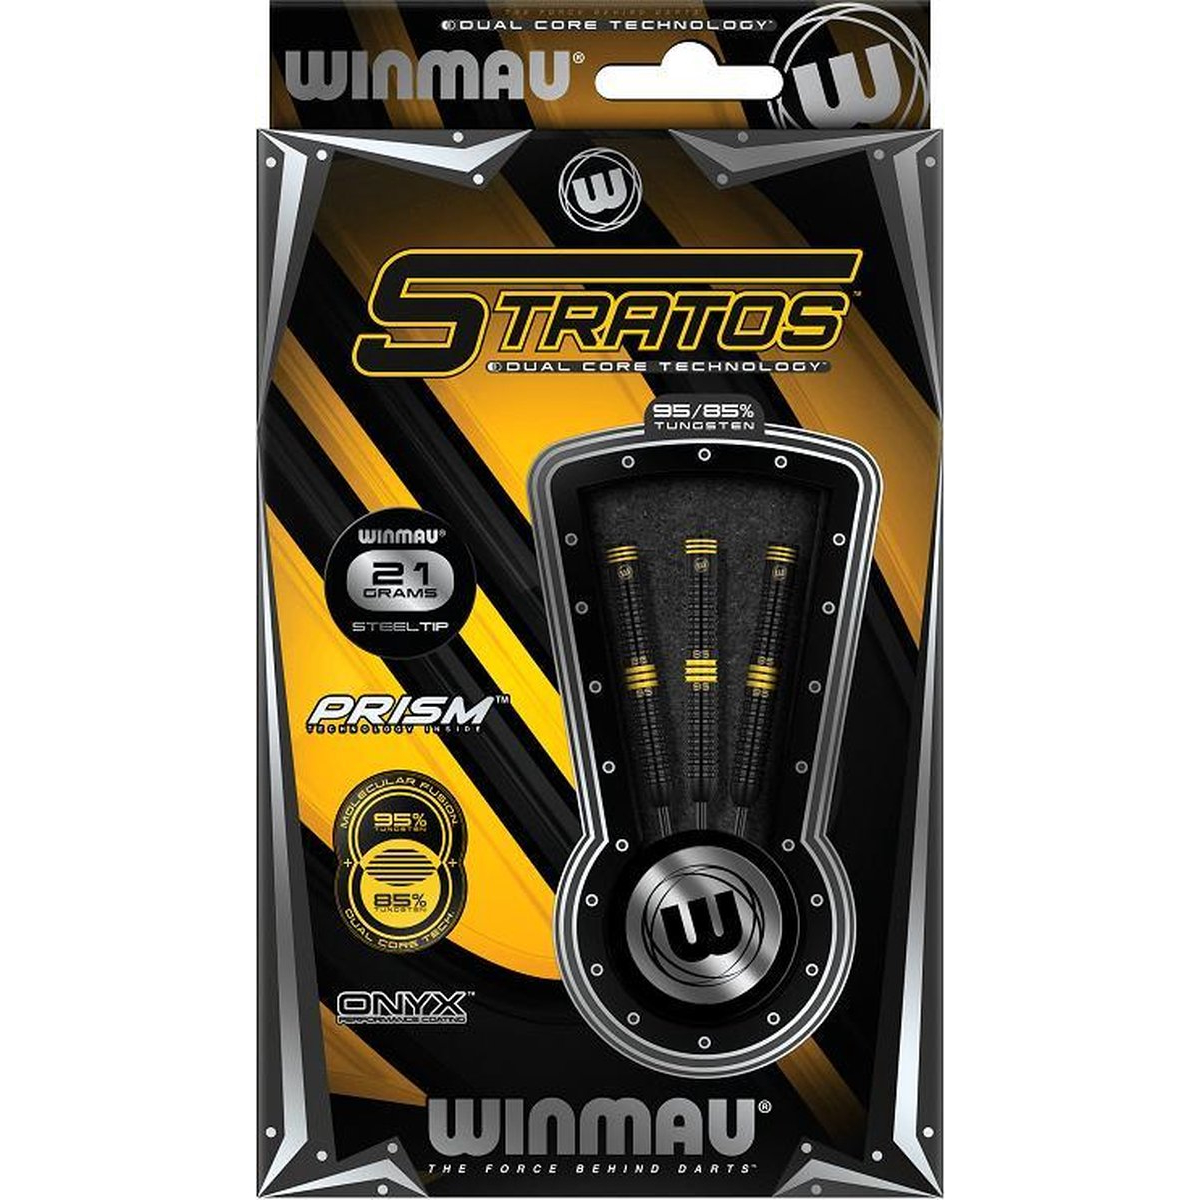  Winmau Stratos Dual Core 95/85% 1 - 23 Gram 